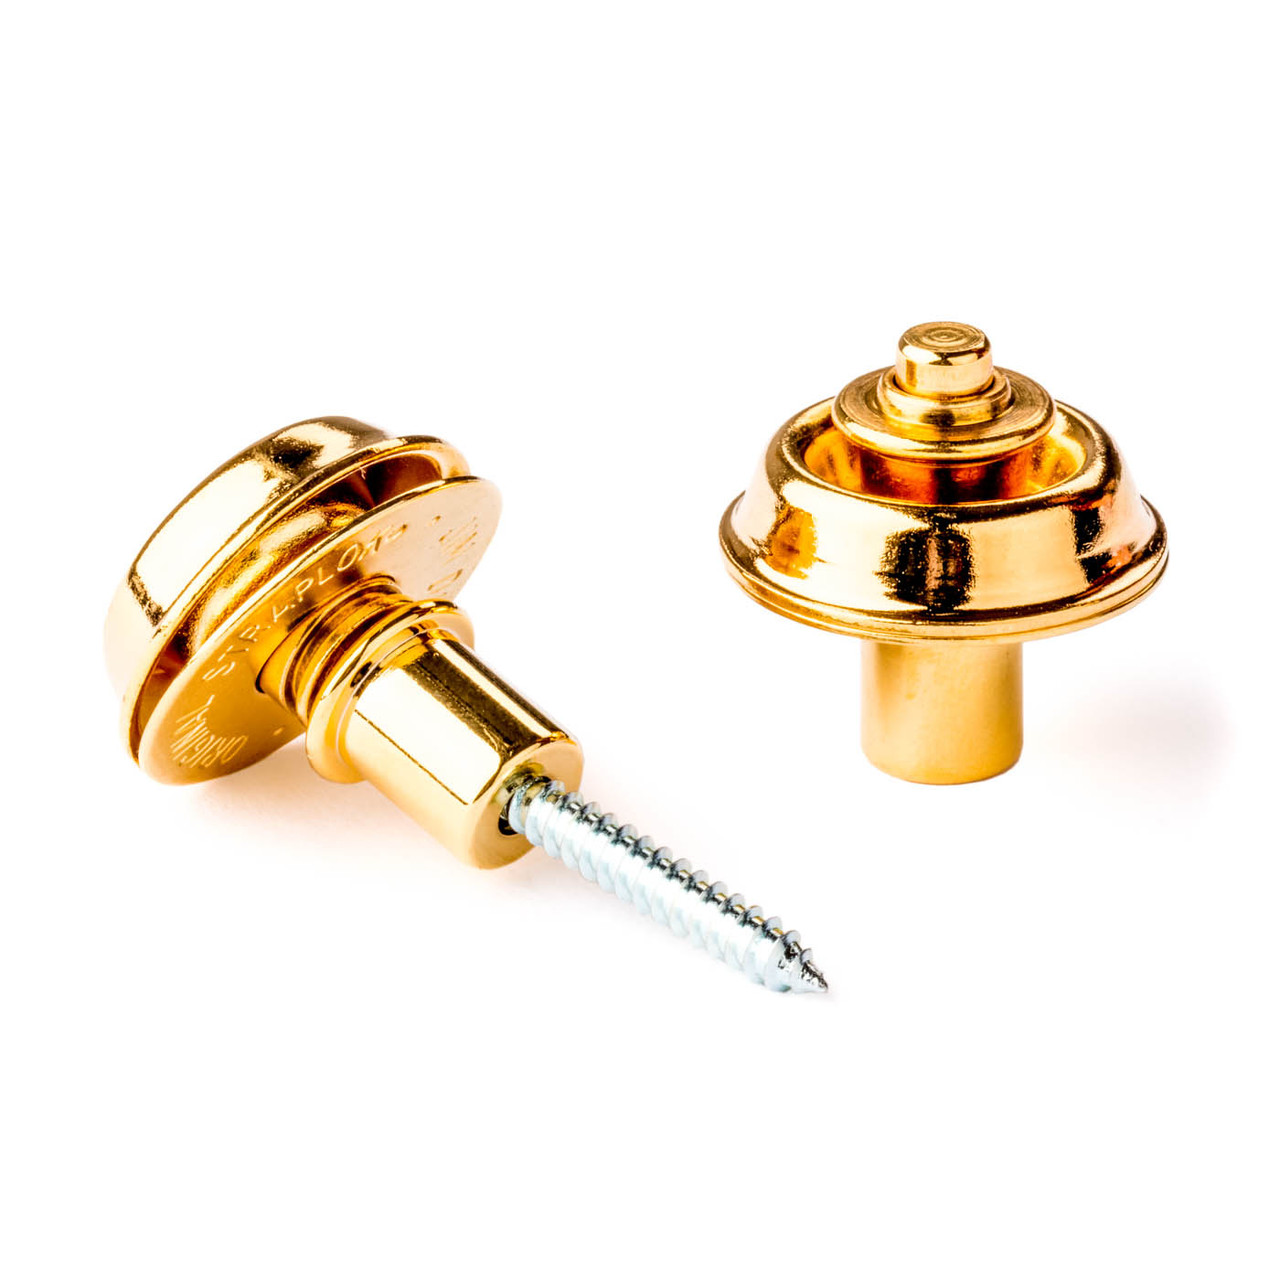 https://www.jimdunlop.com/straplok-strap-retainers-flush-mount-24kt-gold/